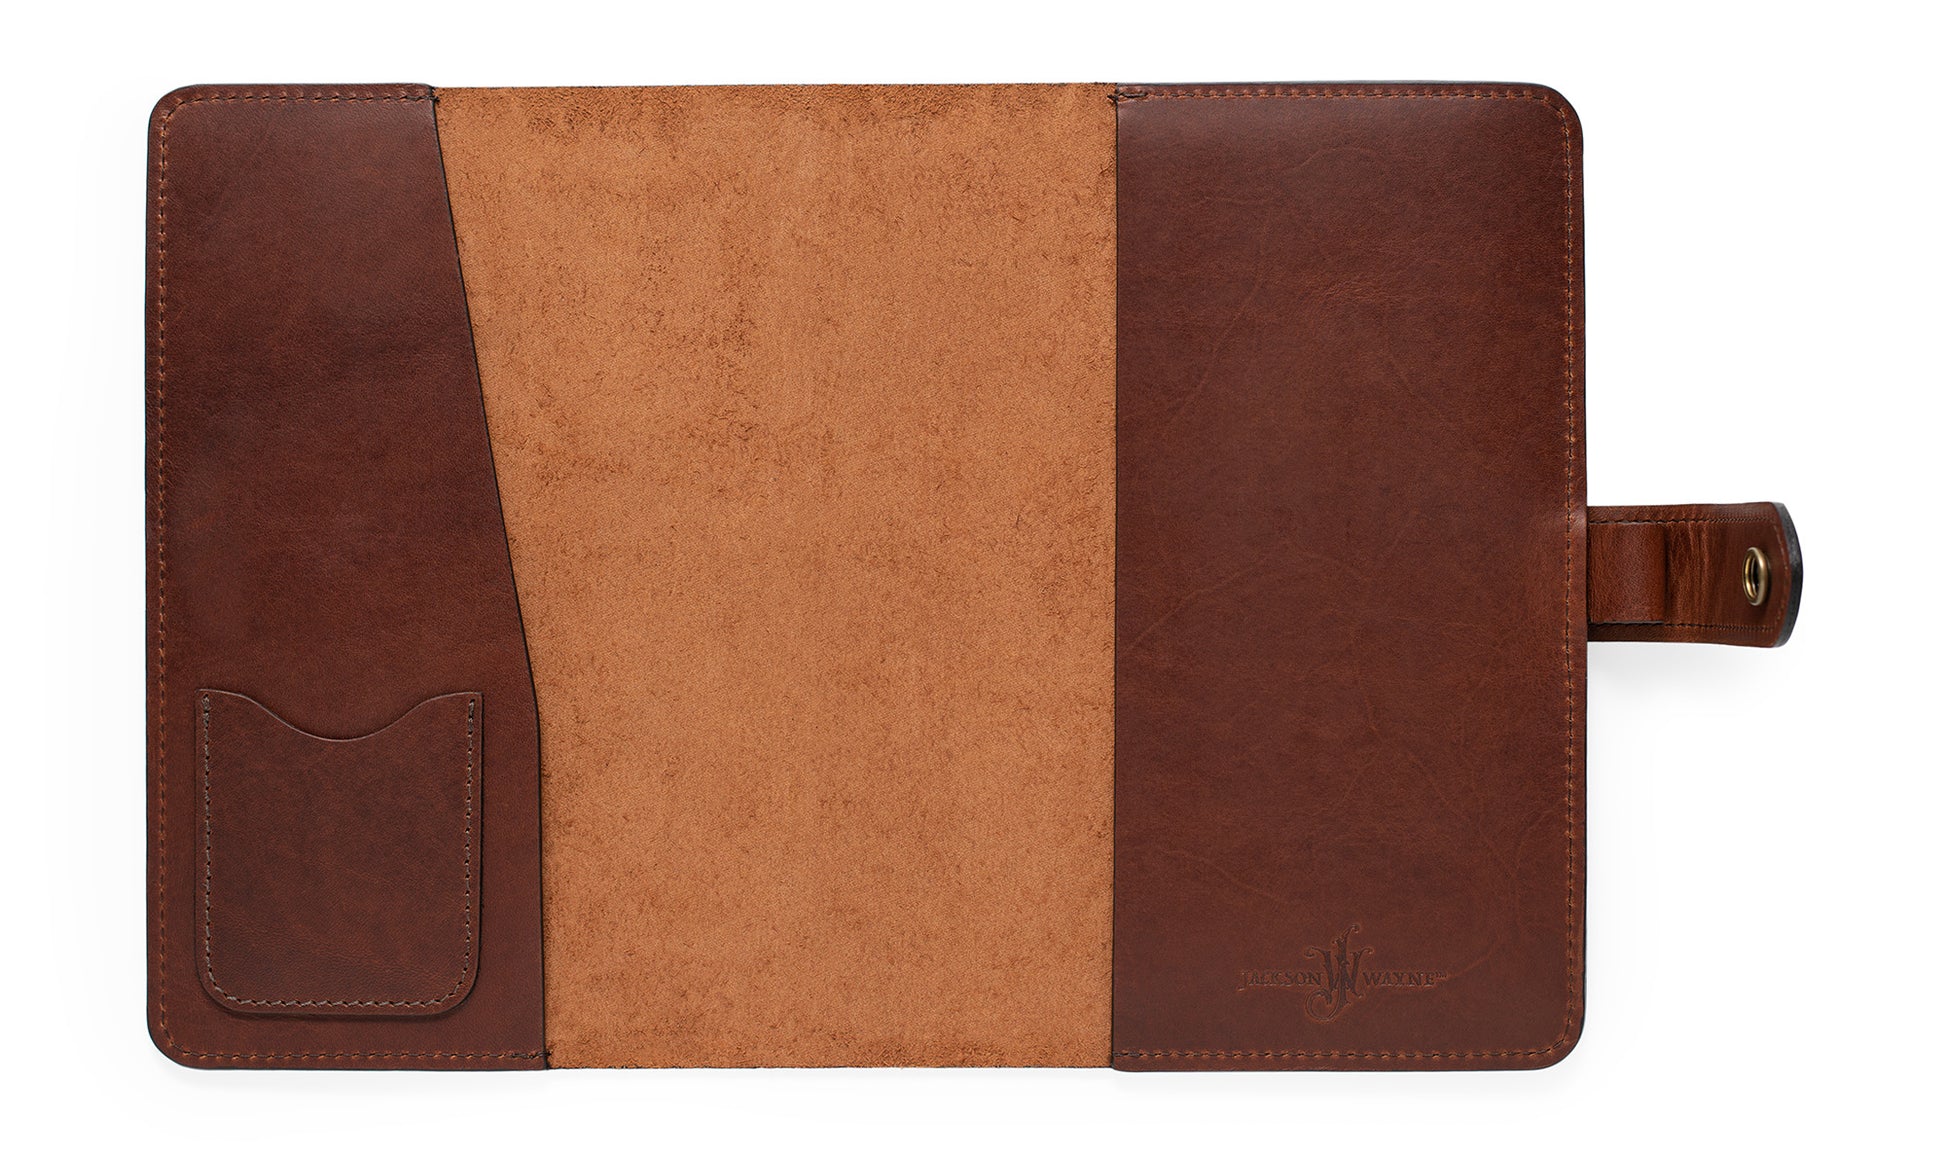 full grain leather planner cover to fit full focus planner by Michael Hyatt in vintage brown, open inside empty